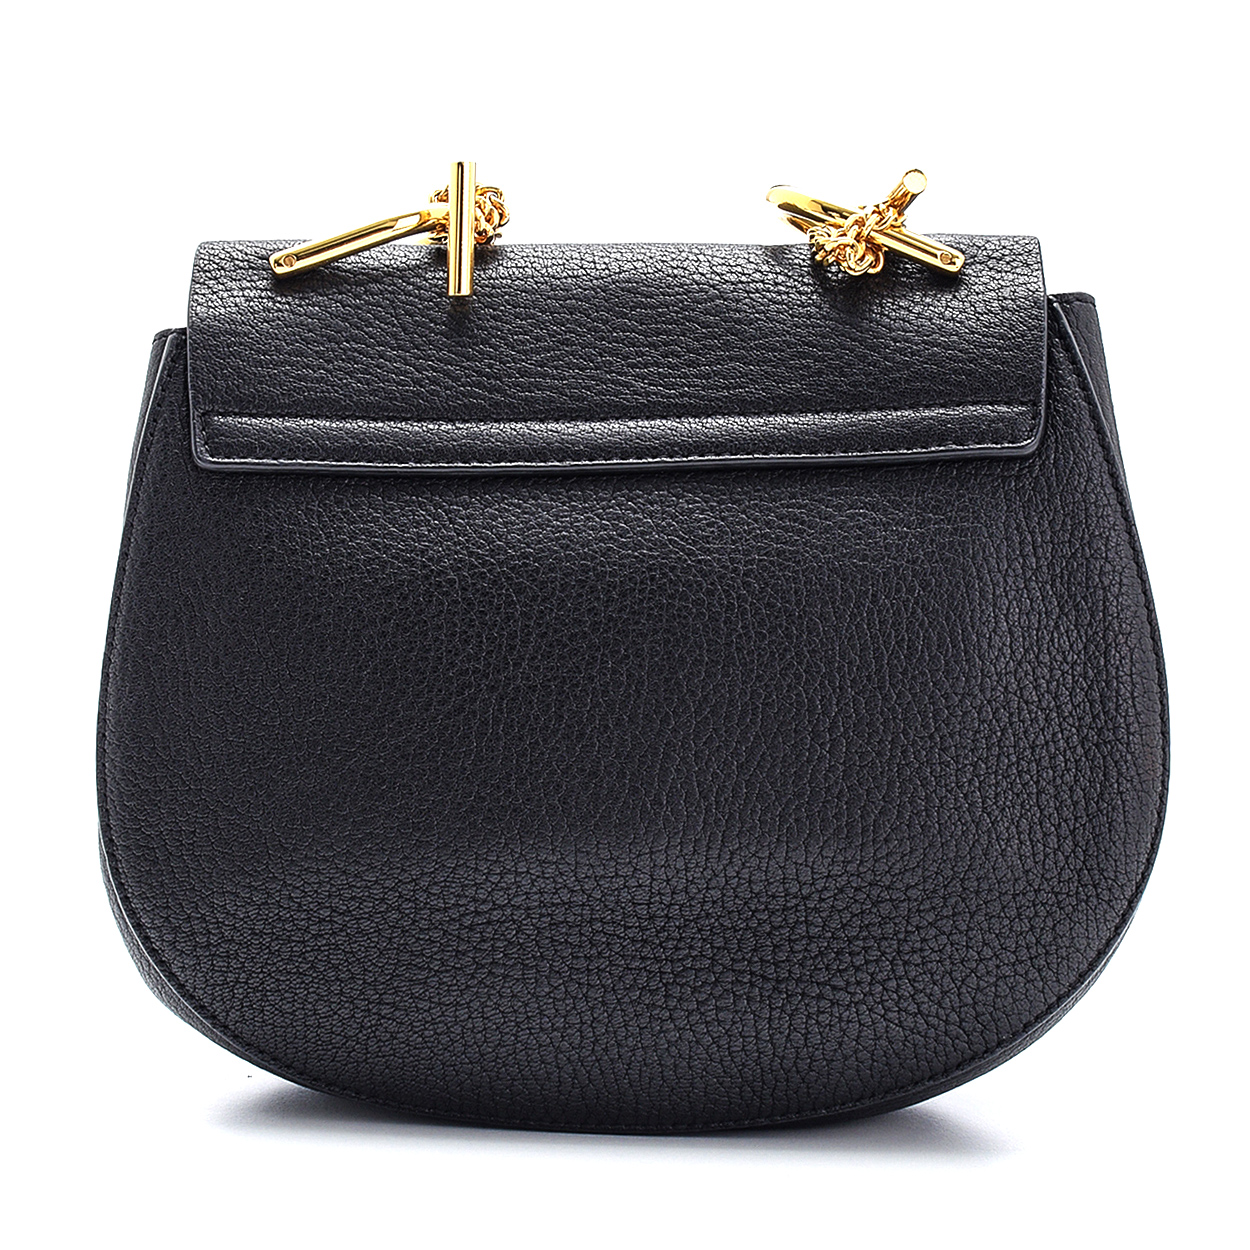 Chloe - Black Grained Calfskin Leather Medium Drew Bag